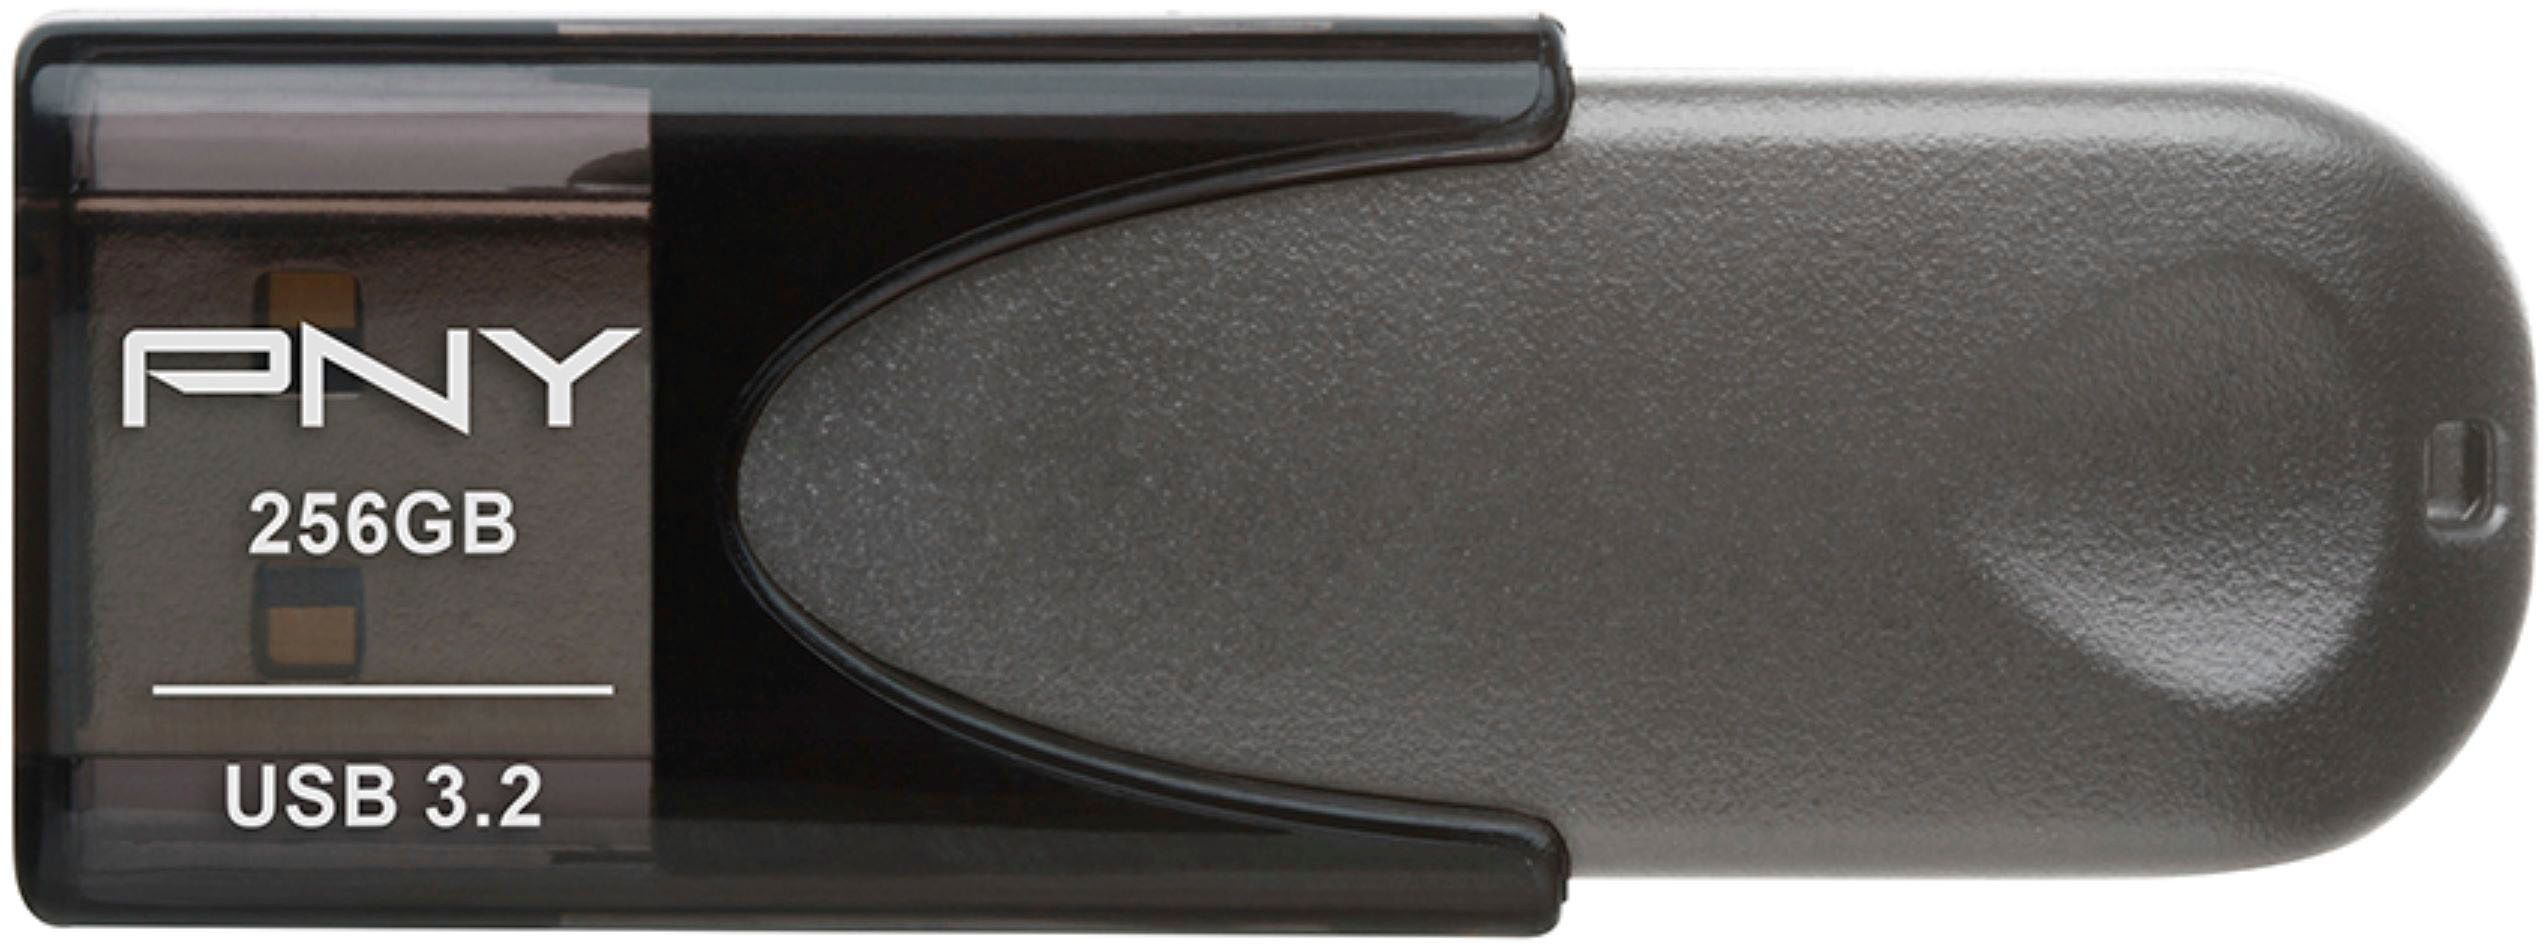 PNY - Elite Turbo Attaché 4 256GB USB 3.0 Type A Flash Drive - Black/Gray